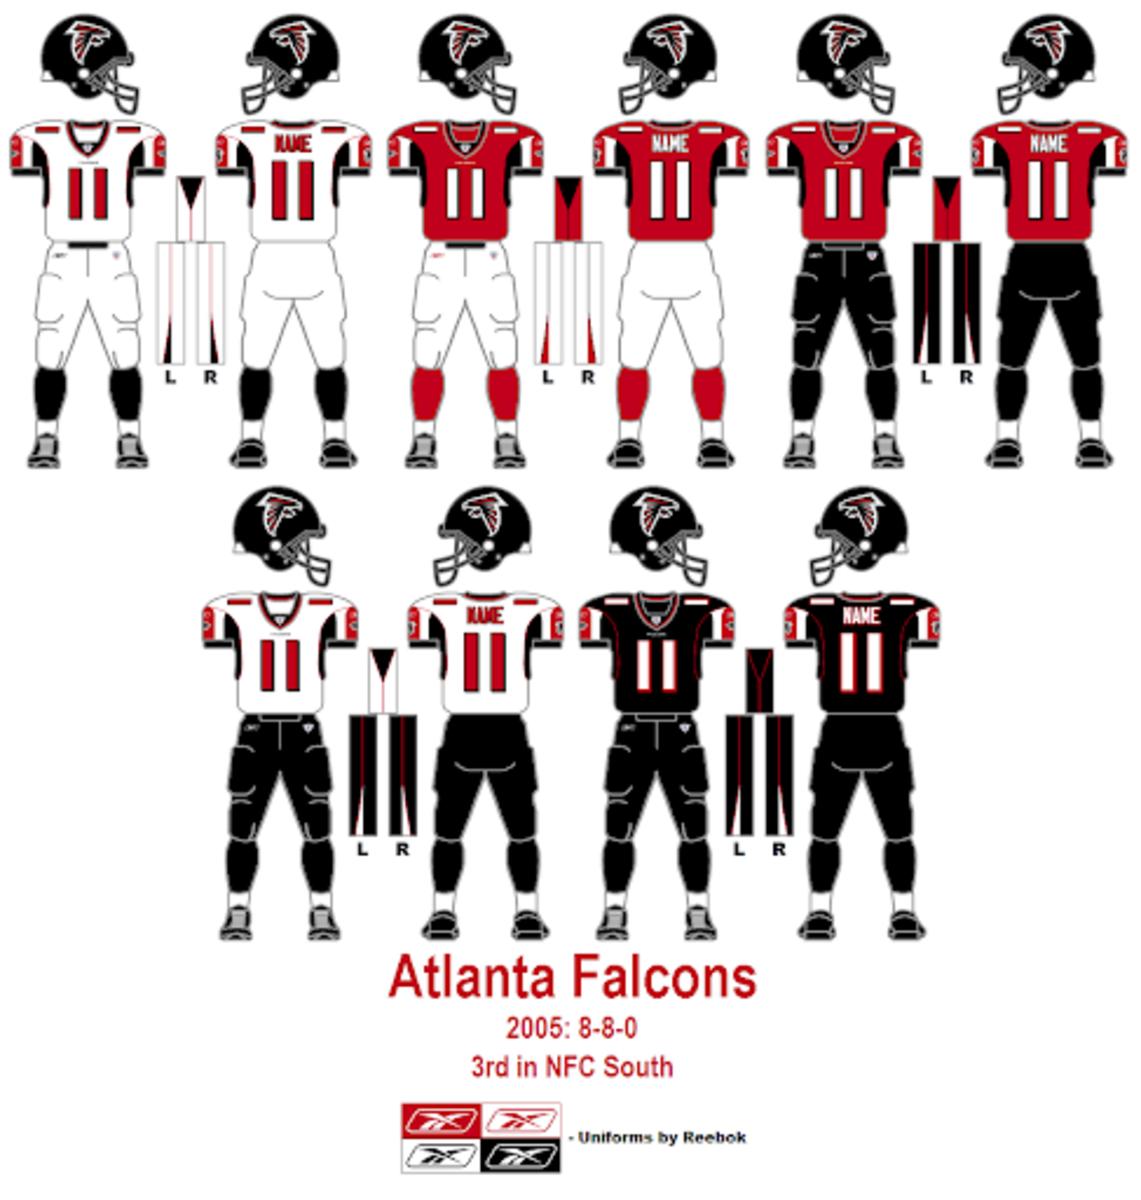 2020 atlanta falcons uniforms